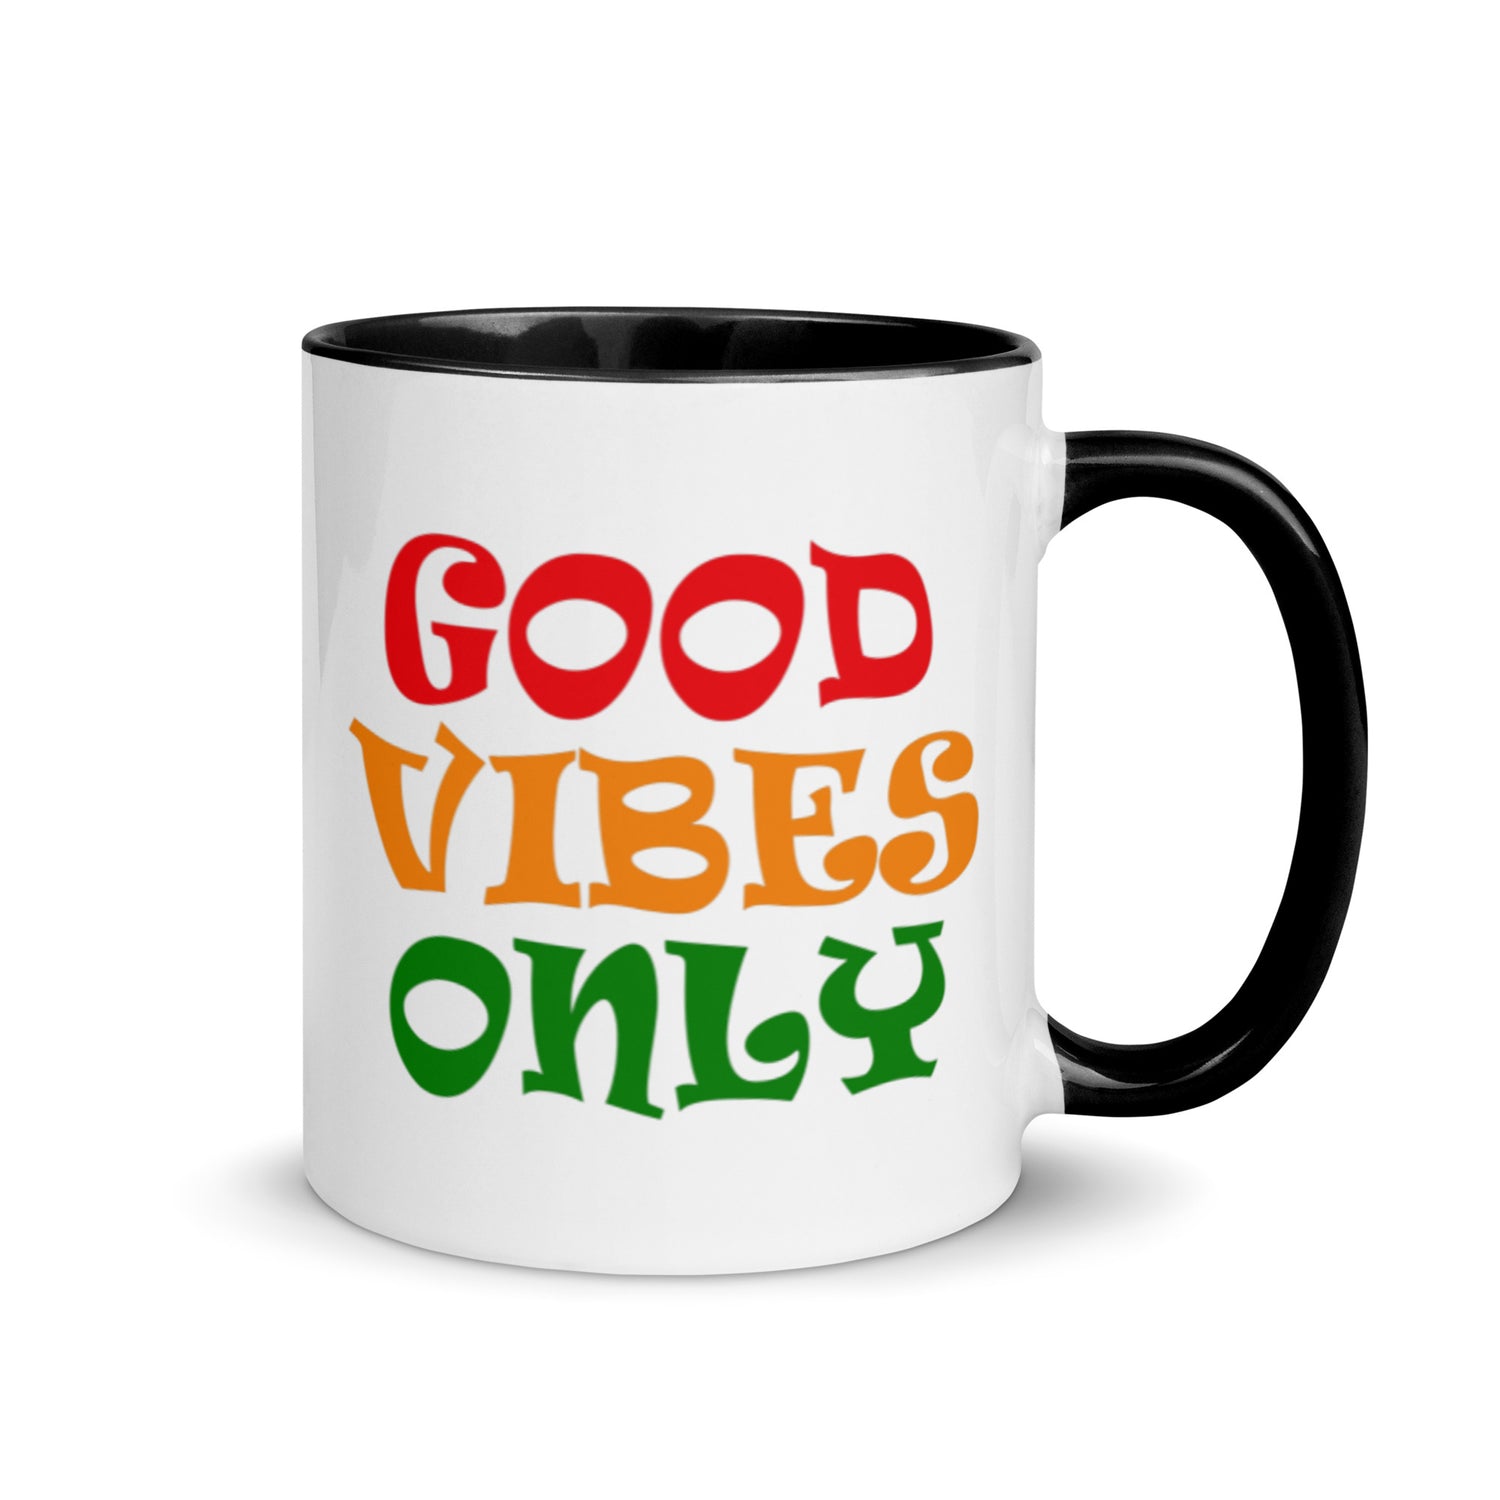 good vibes only ceramic mug, black interior and black handle